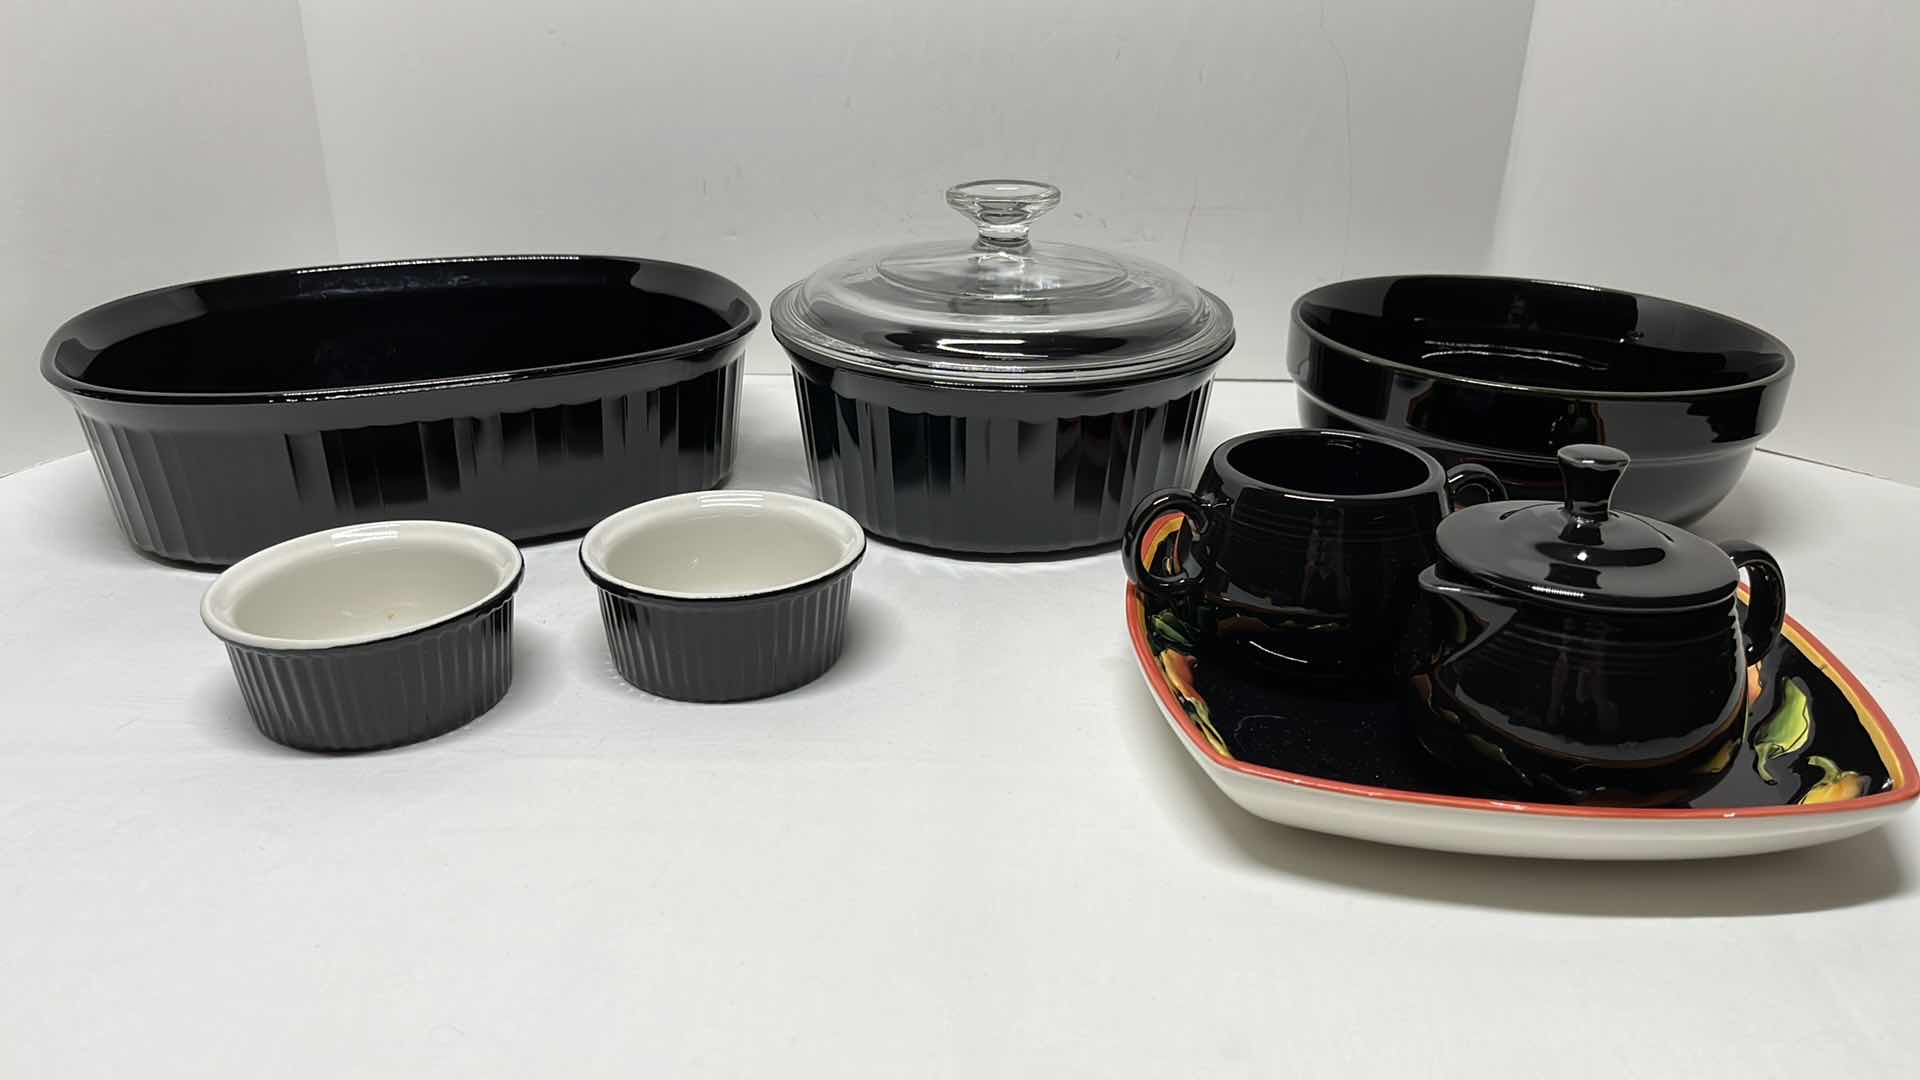 Photo 1 of 2 BLACK CORNING WARE DISHES, MIXING BOWL, 2 SMALL RAMEKINS, CREAM & SUGAR DISHES W BLACK CHILE PEPPER PLATE (9 PCS)